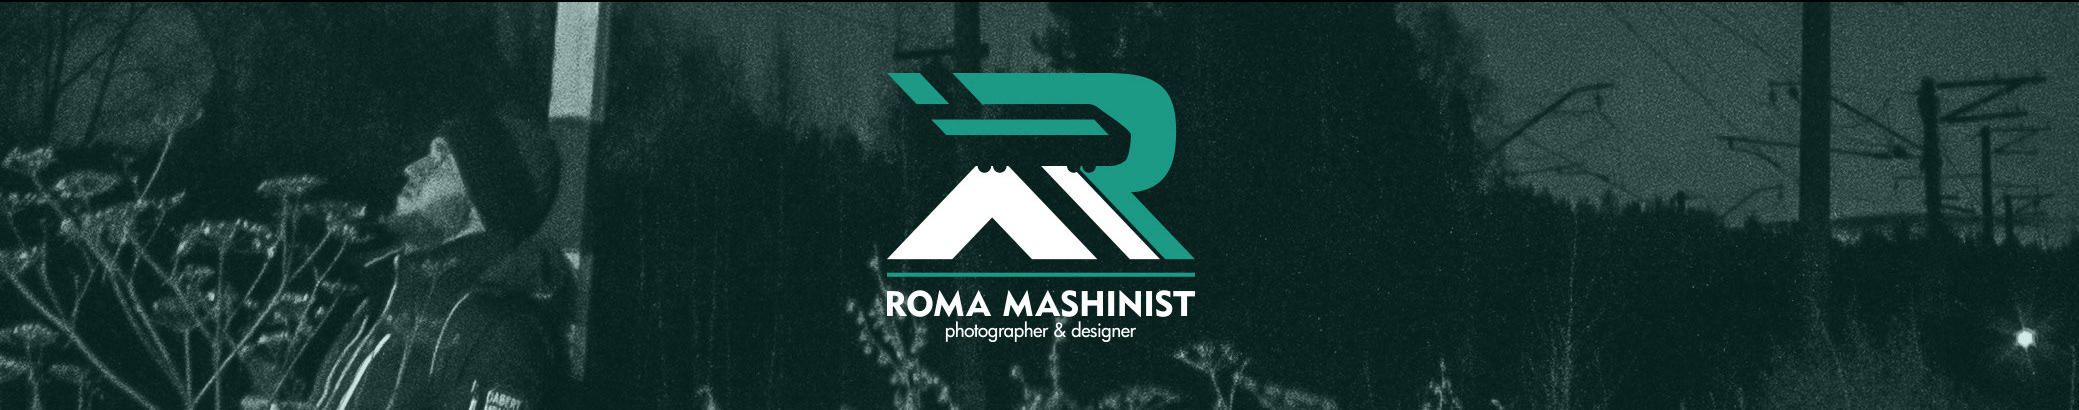 Roma Mashinists profilbanner